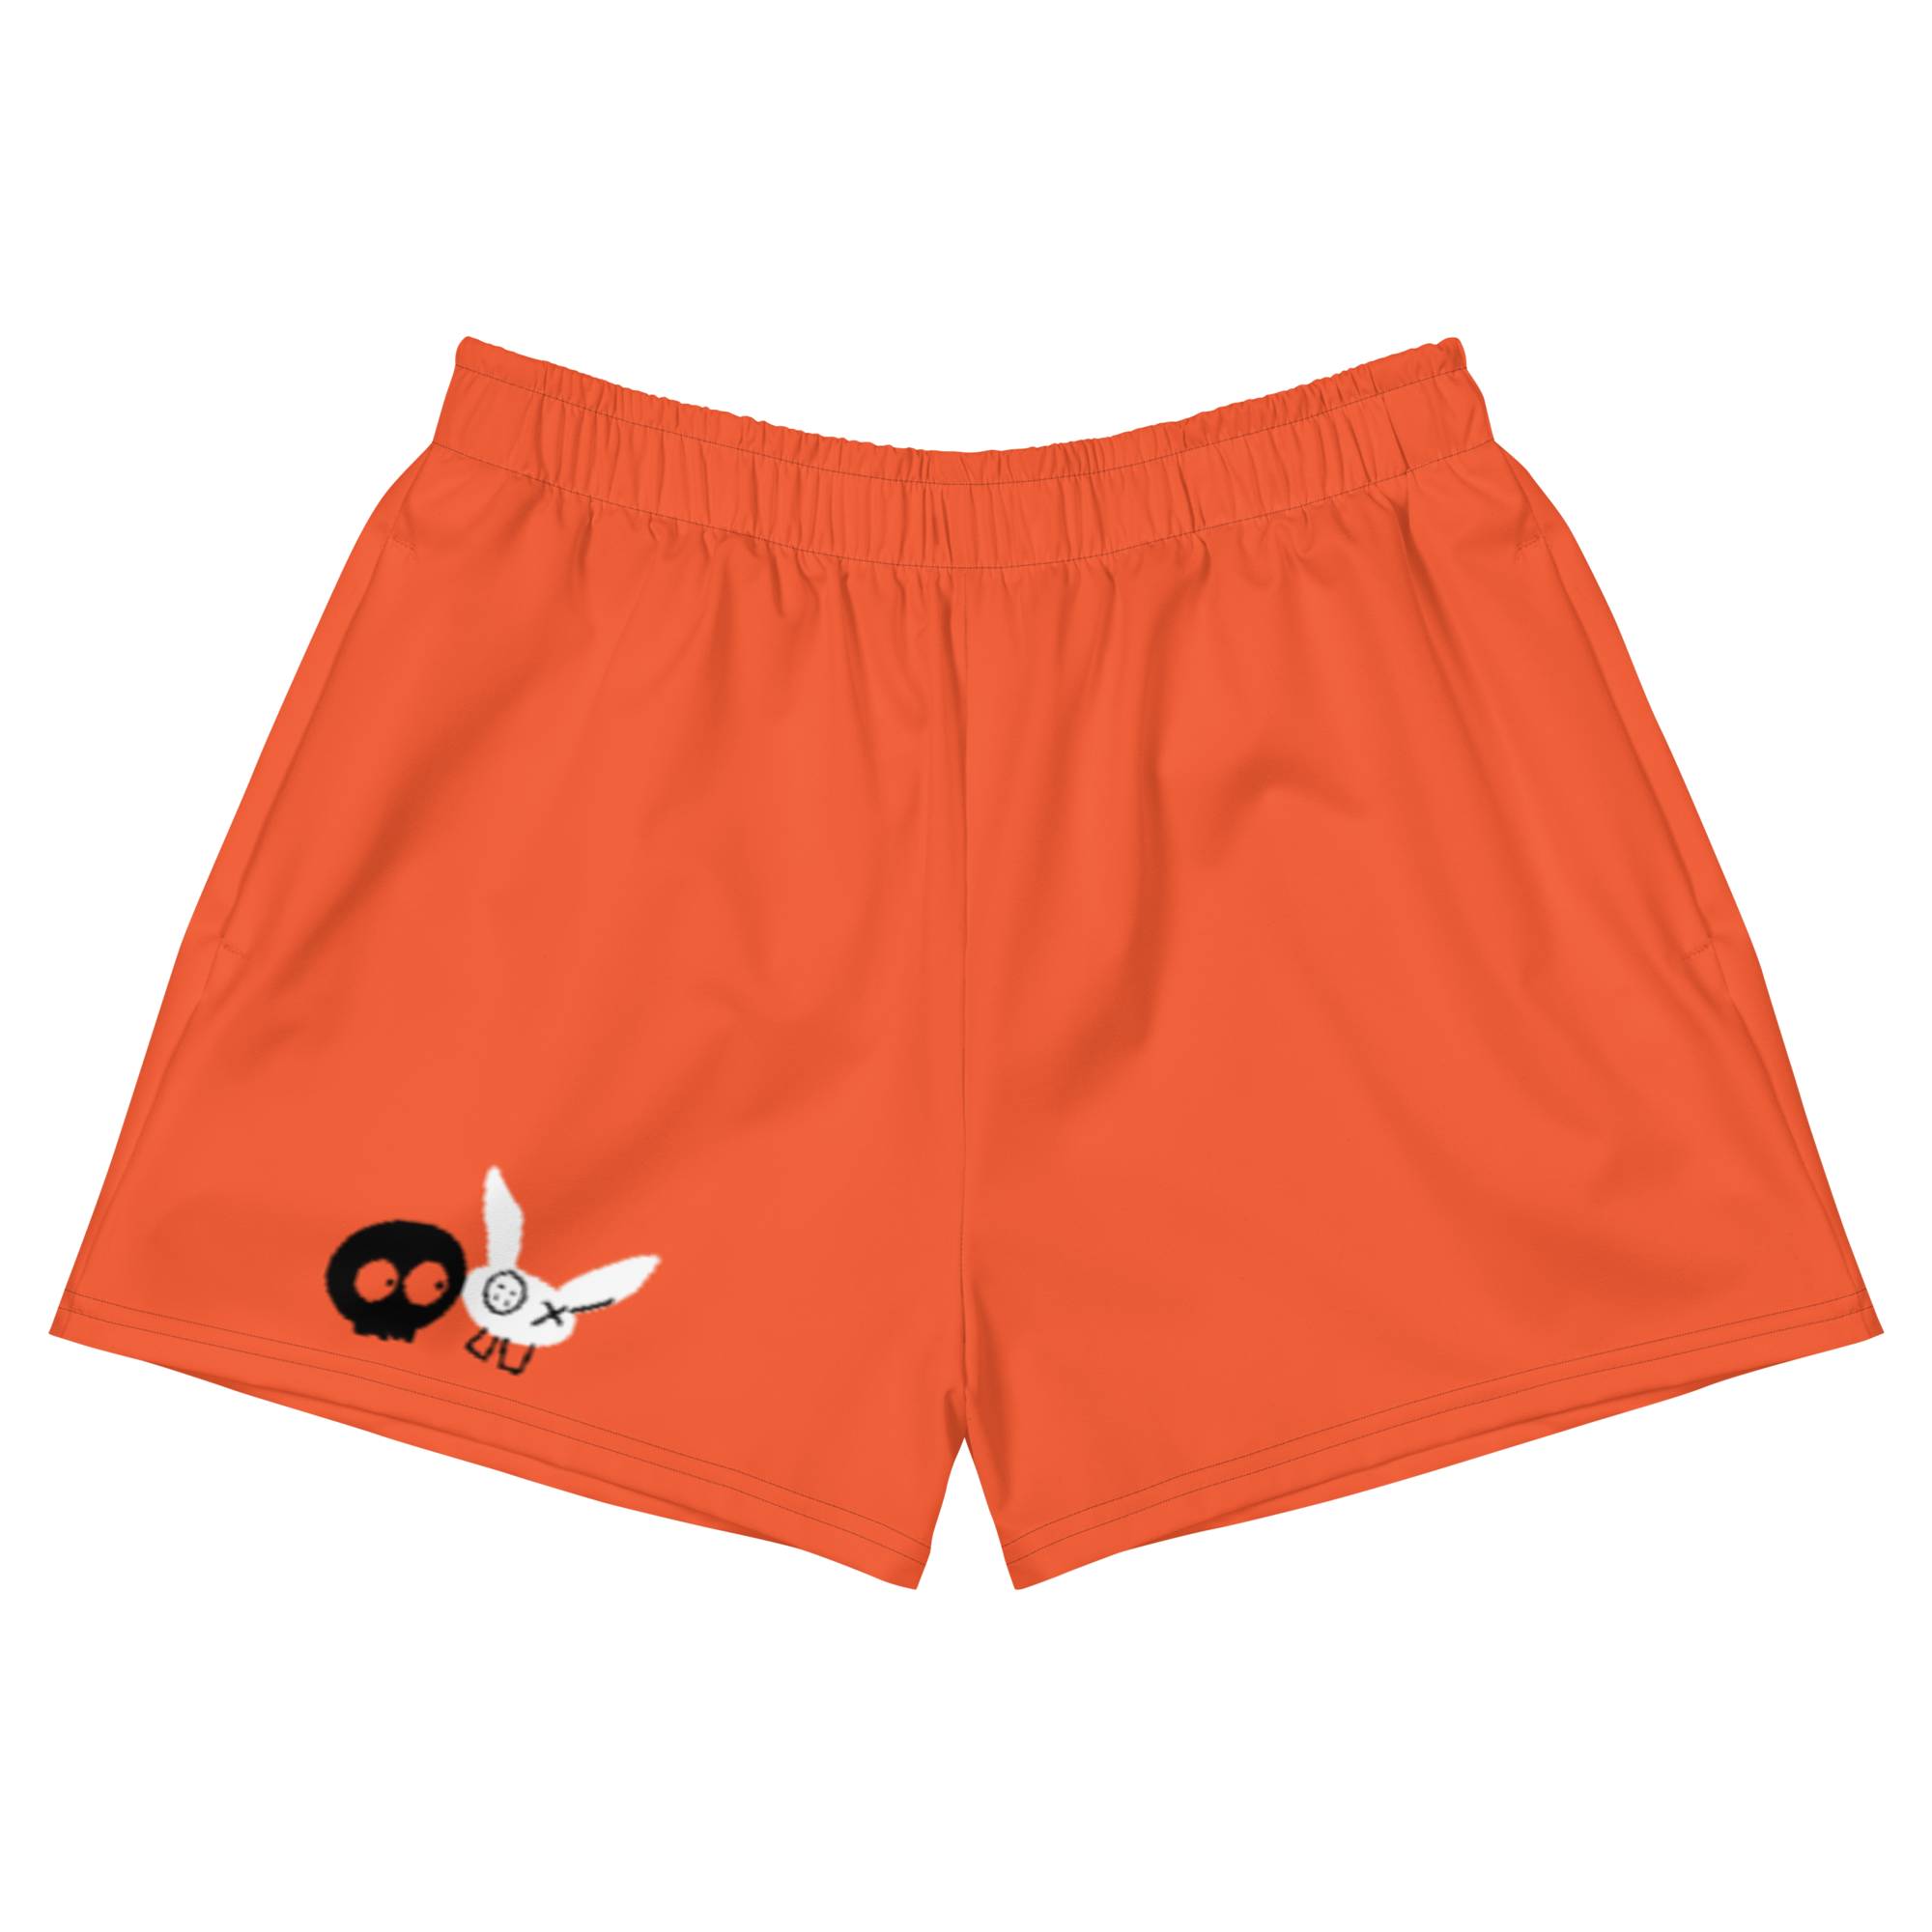 Shawty Orange Camo Seamless Active Wear Sport Shorts Size 12 / L (s)